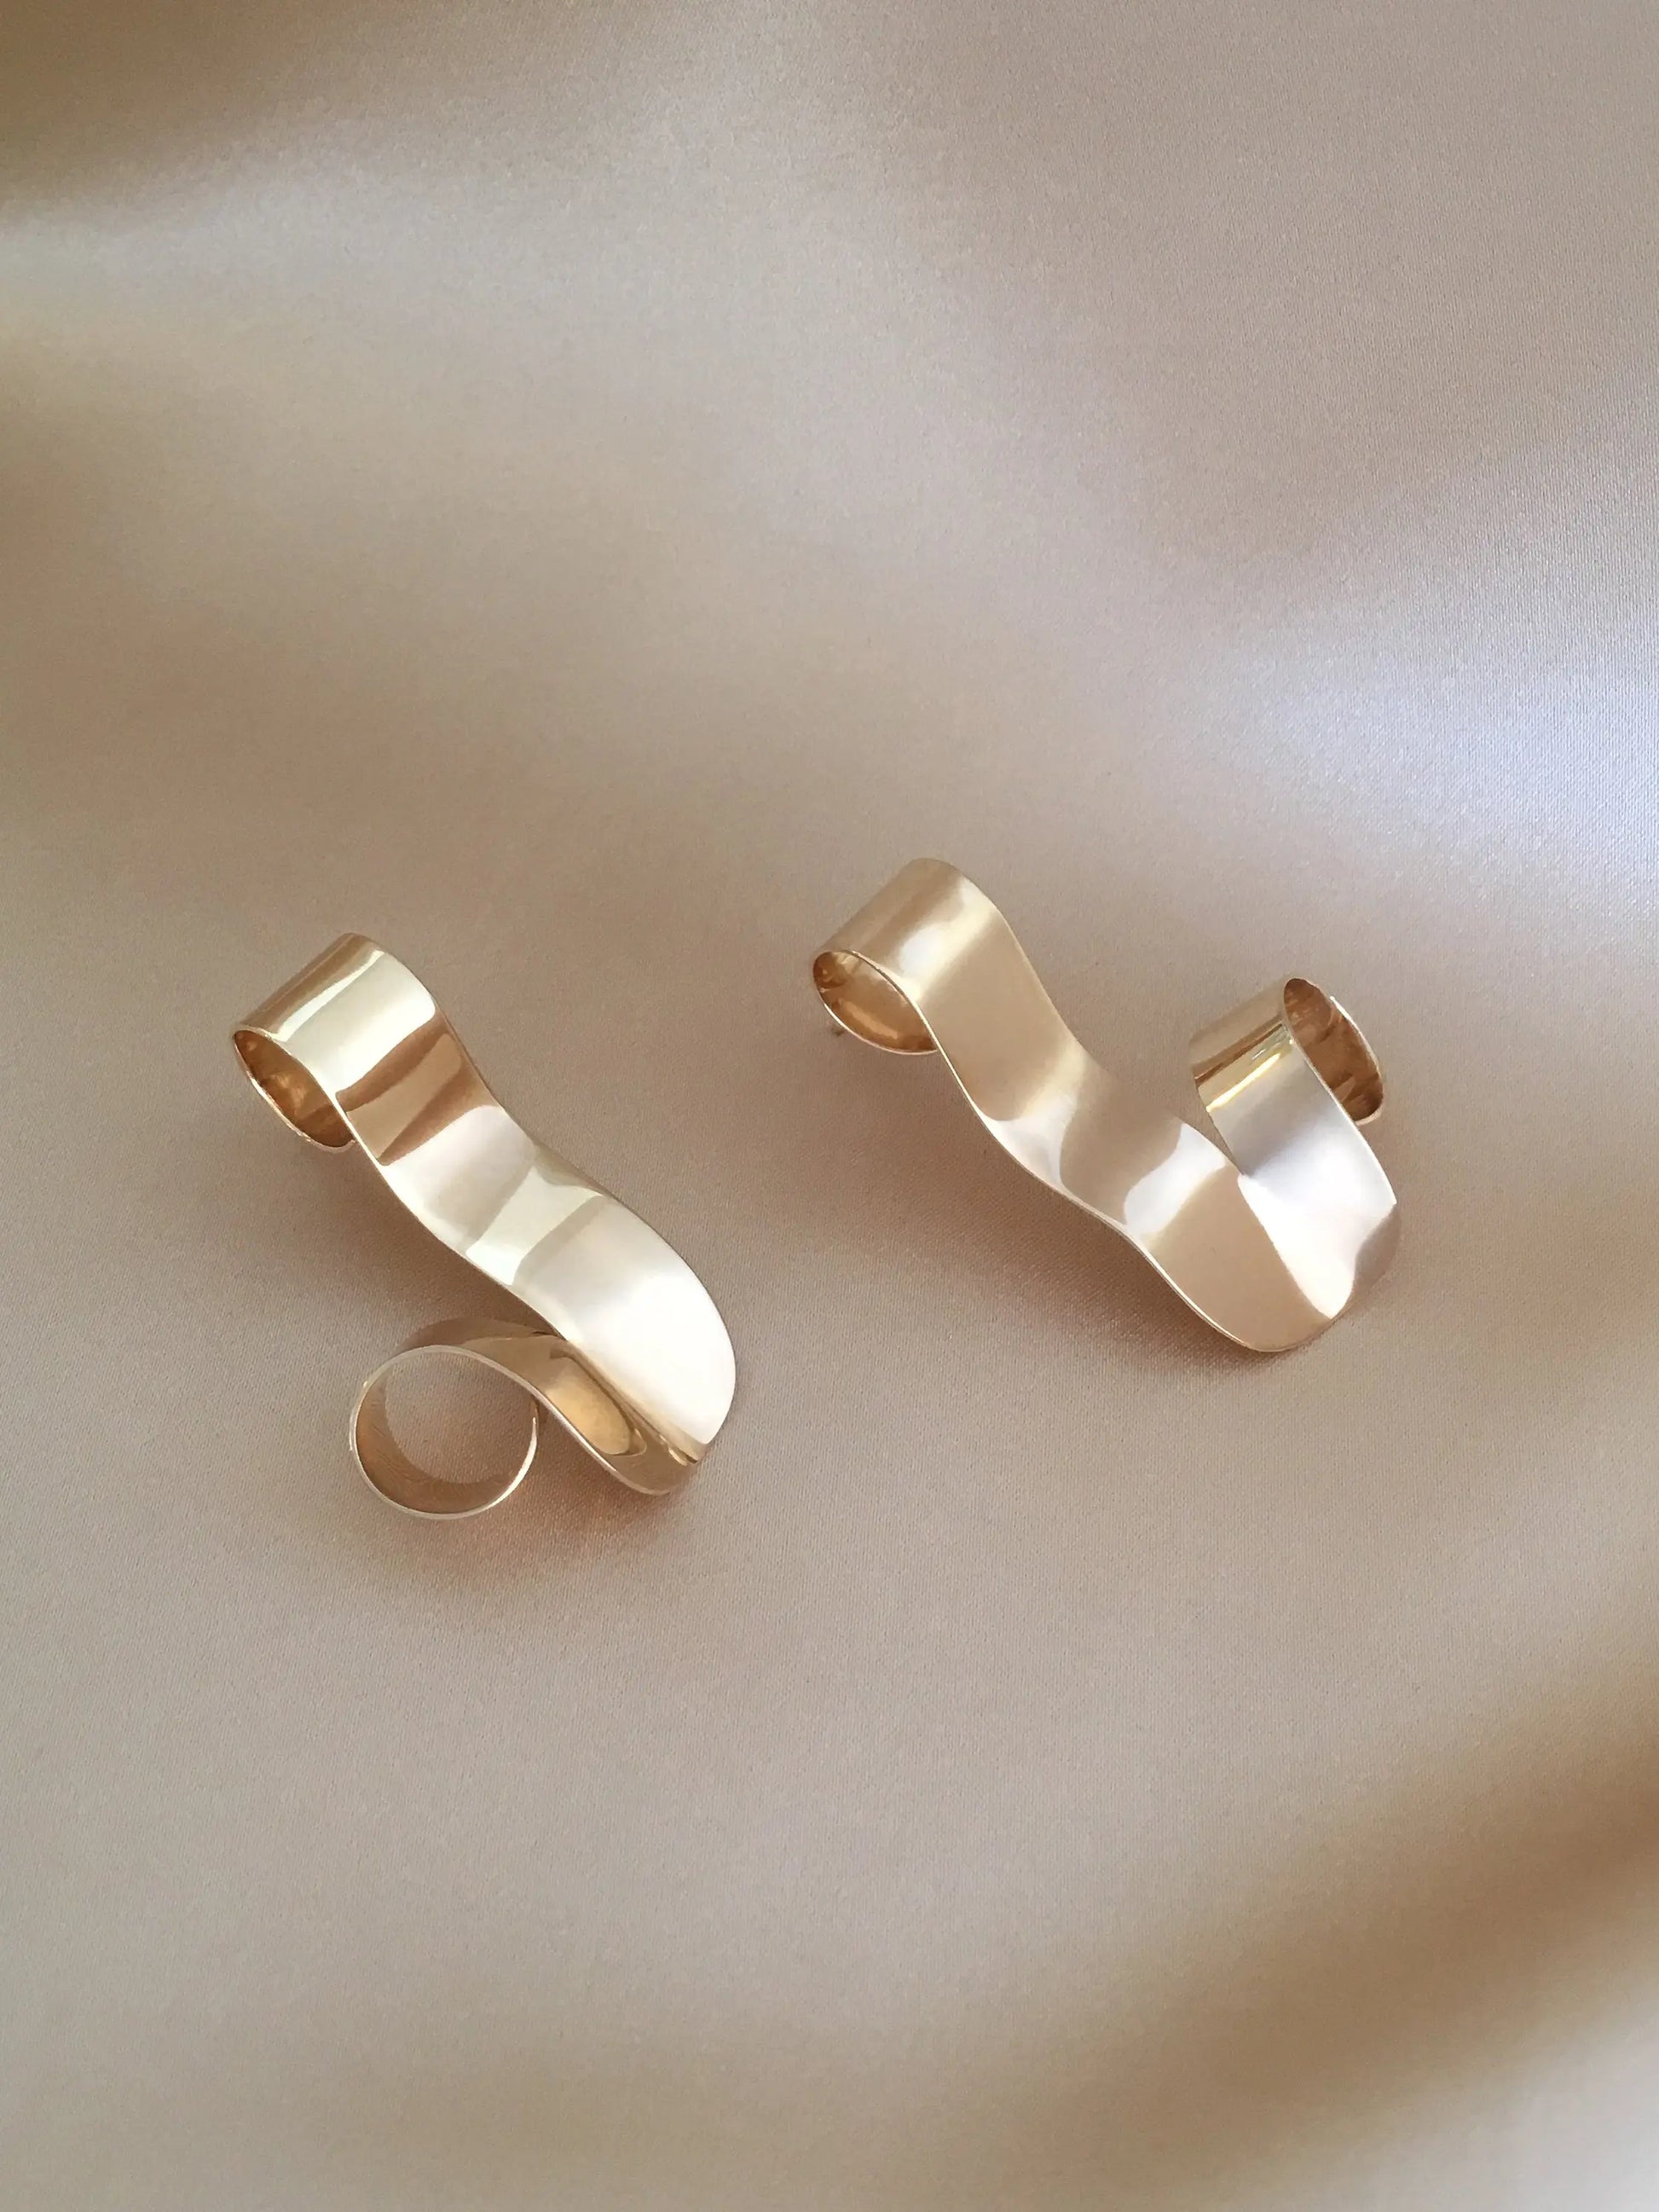 Curled Earrings In Gold Vermeil Sara Robertsson Jewellery